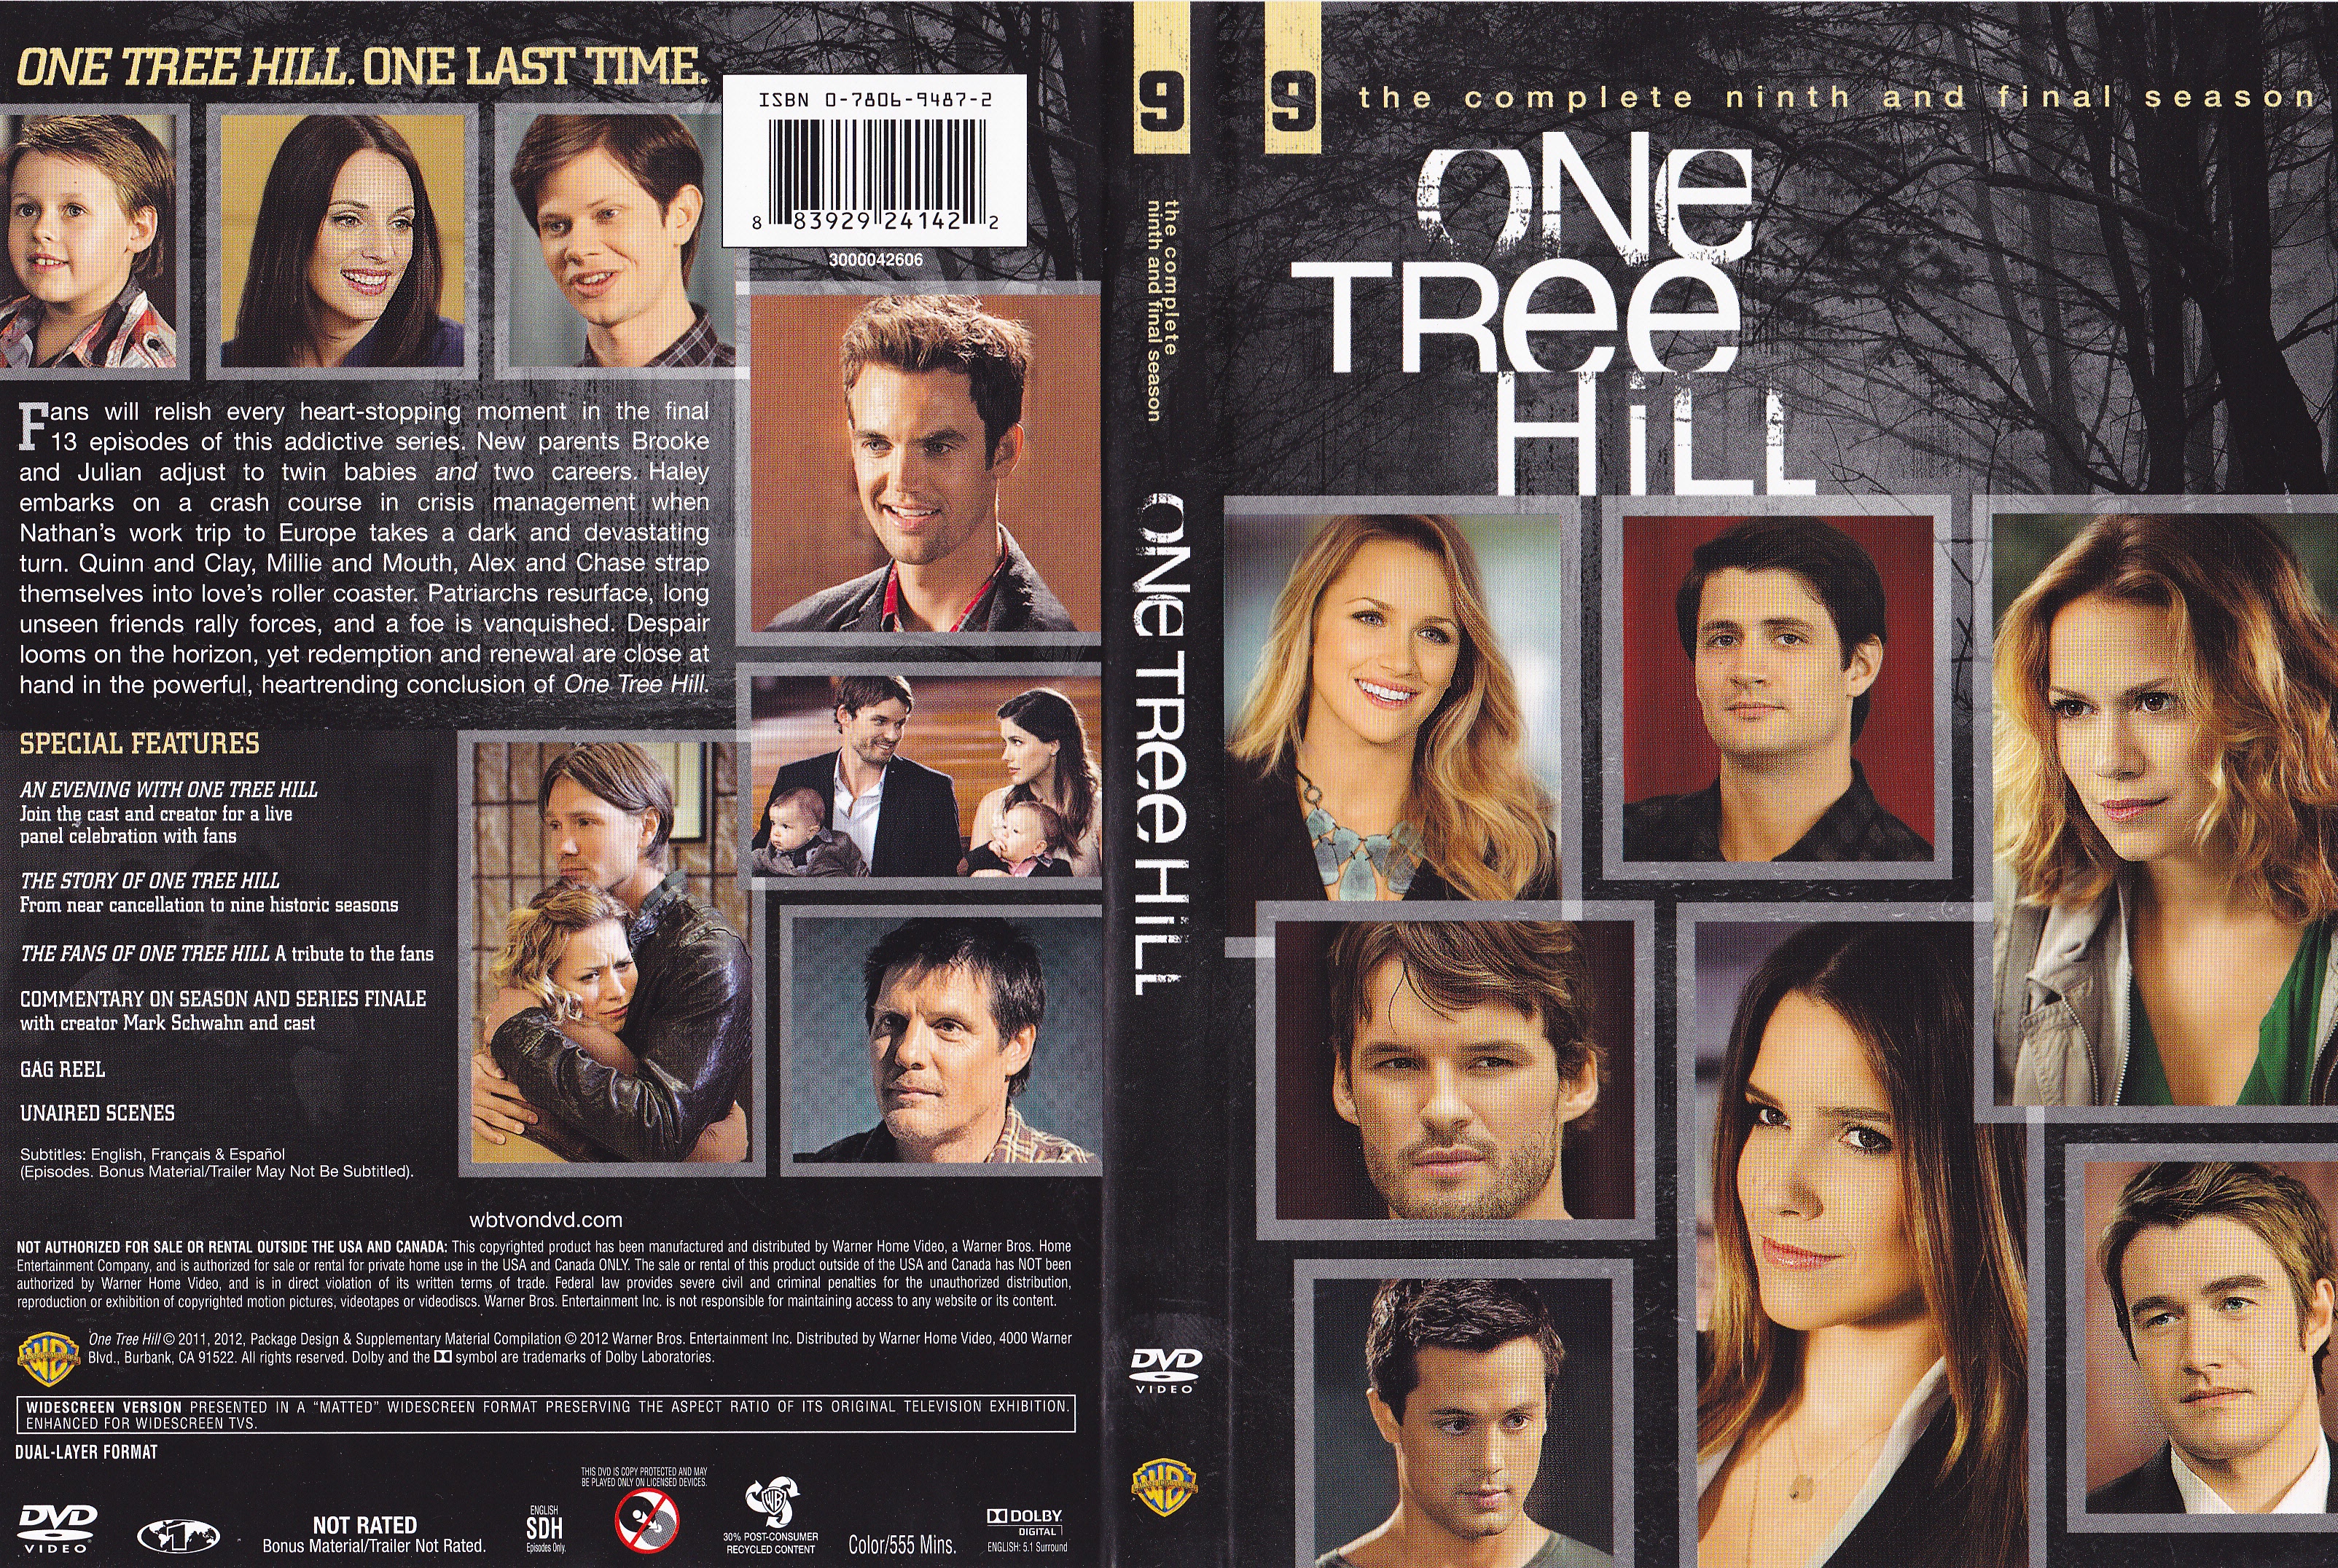 Jaquette DVD One Three hill Saison 9